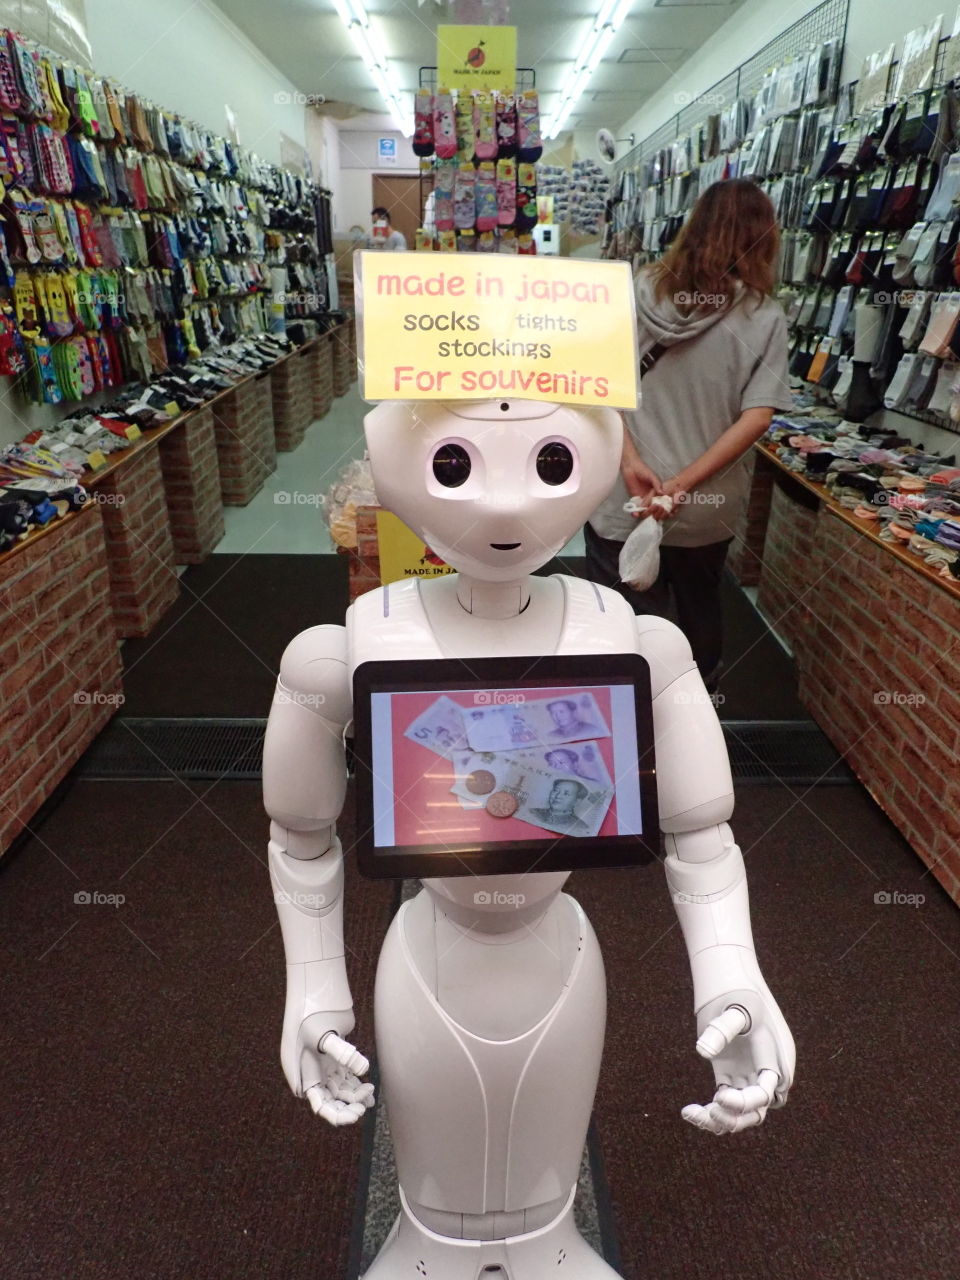 Robot at the shop